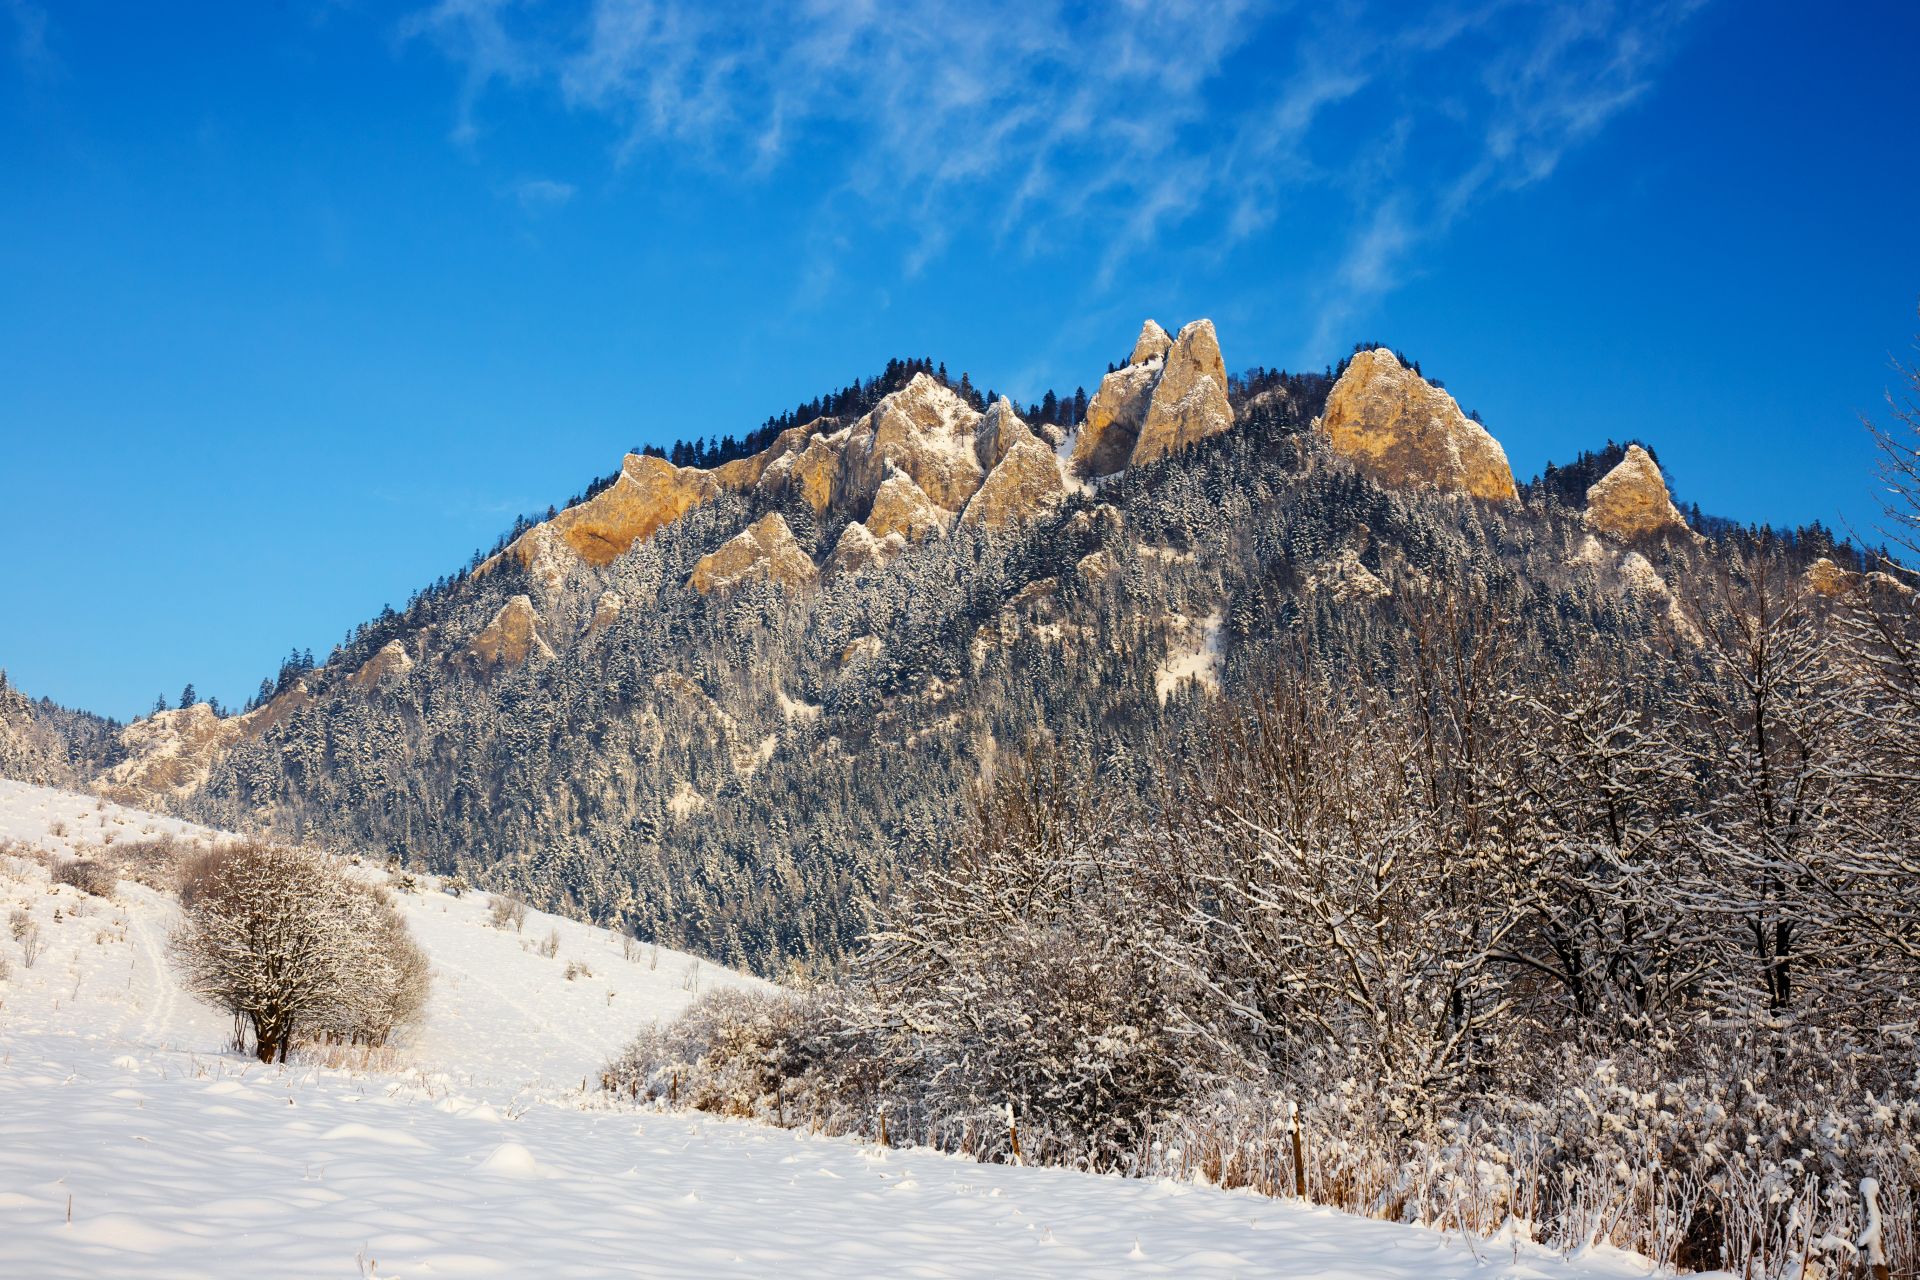 Winter landscape in Pieniny Mountains, Three Crowns, Poland